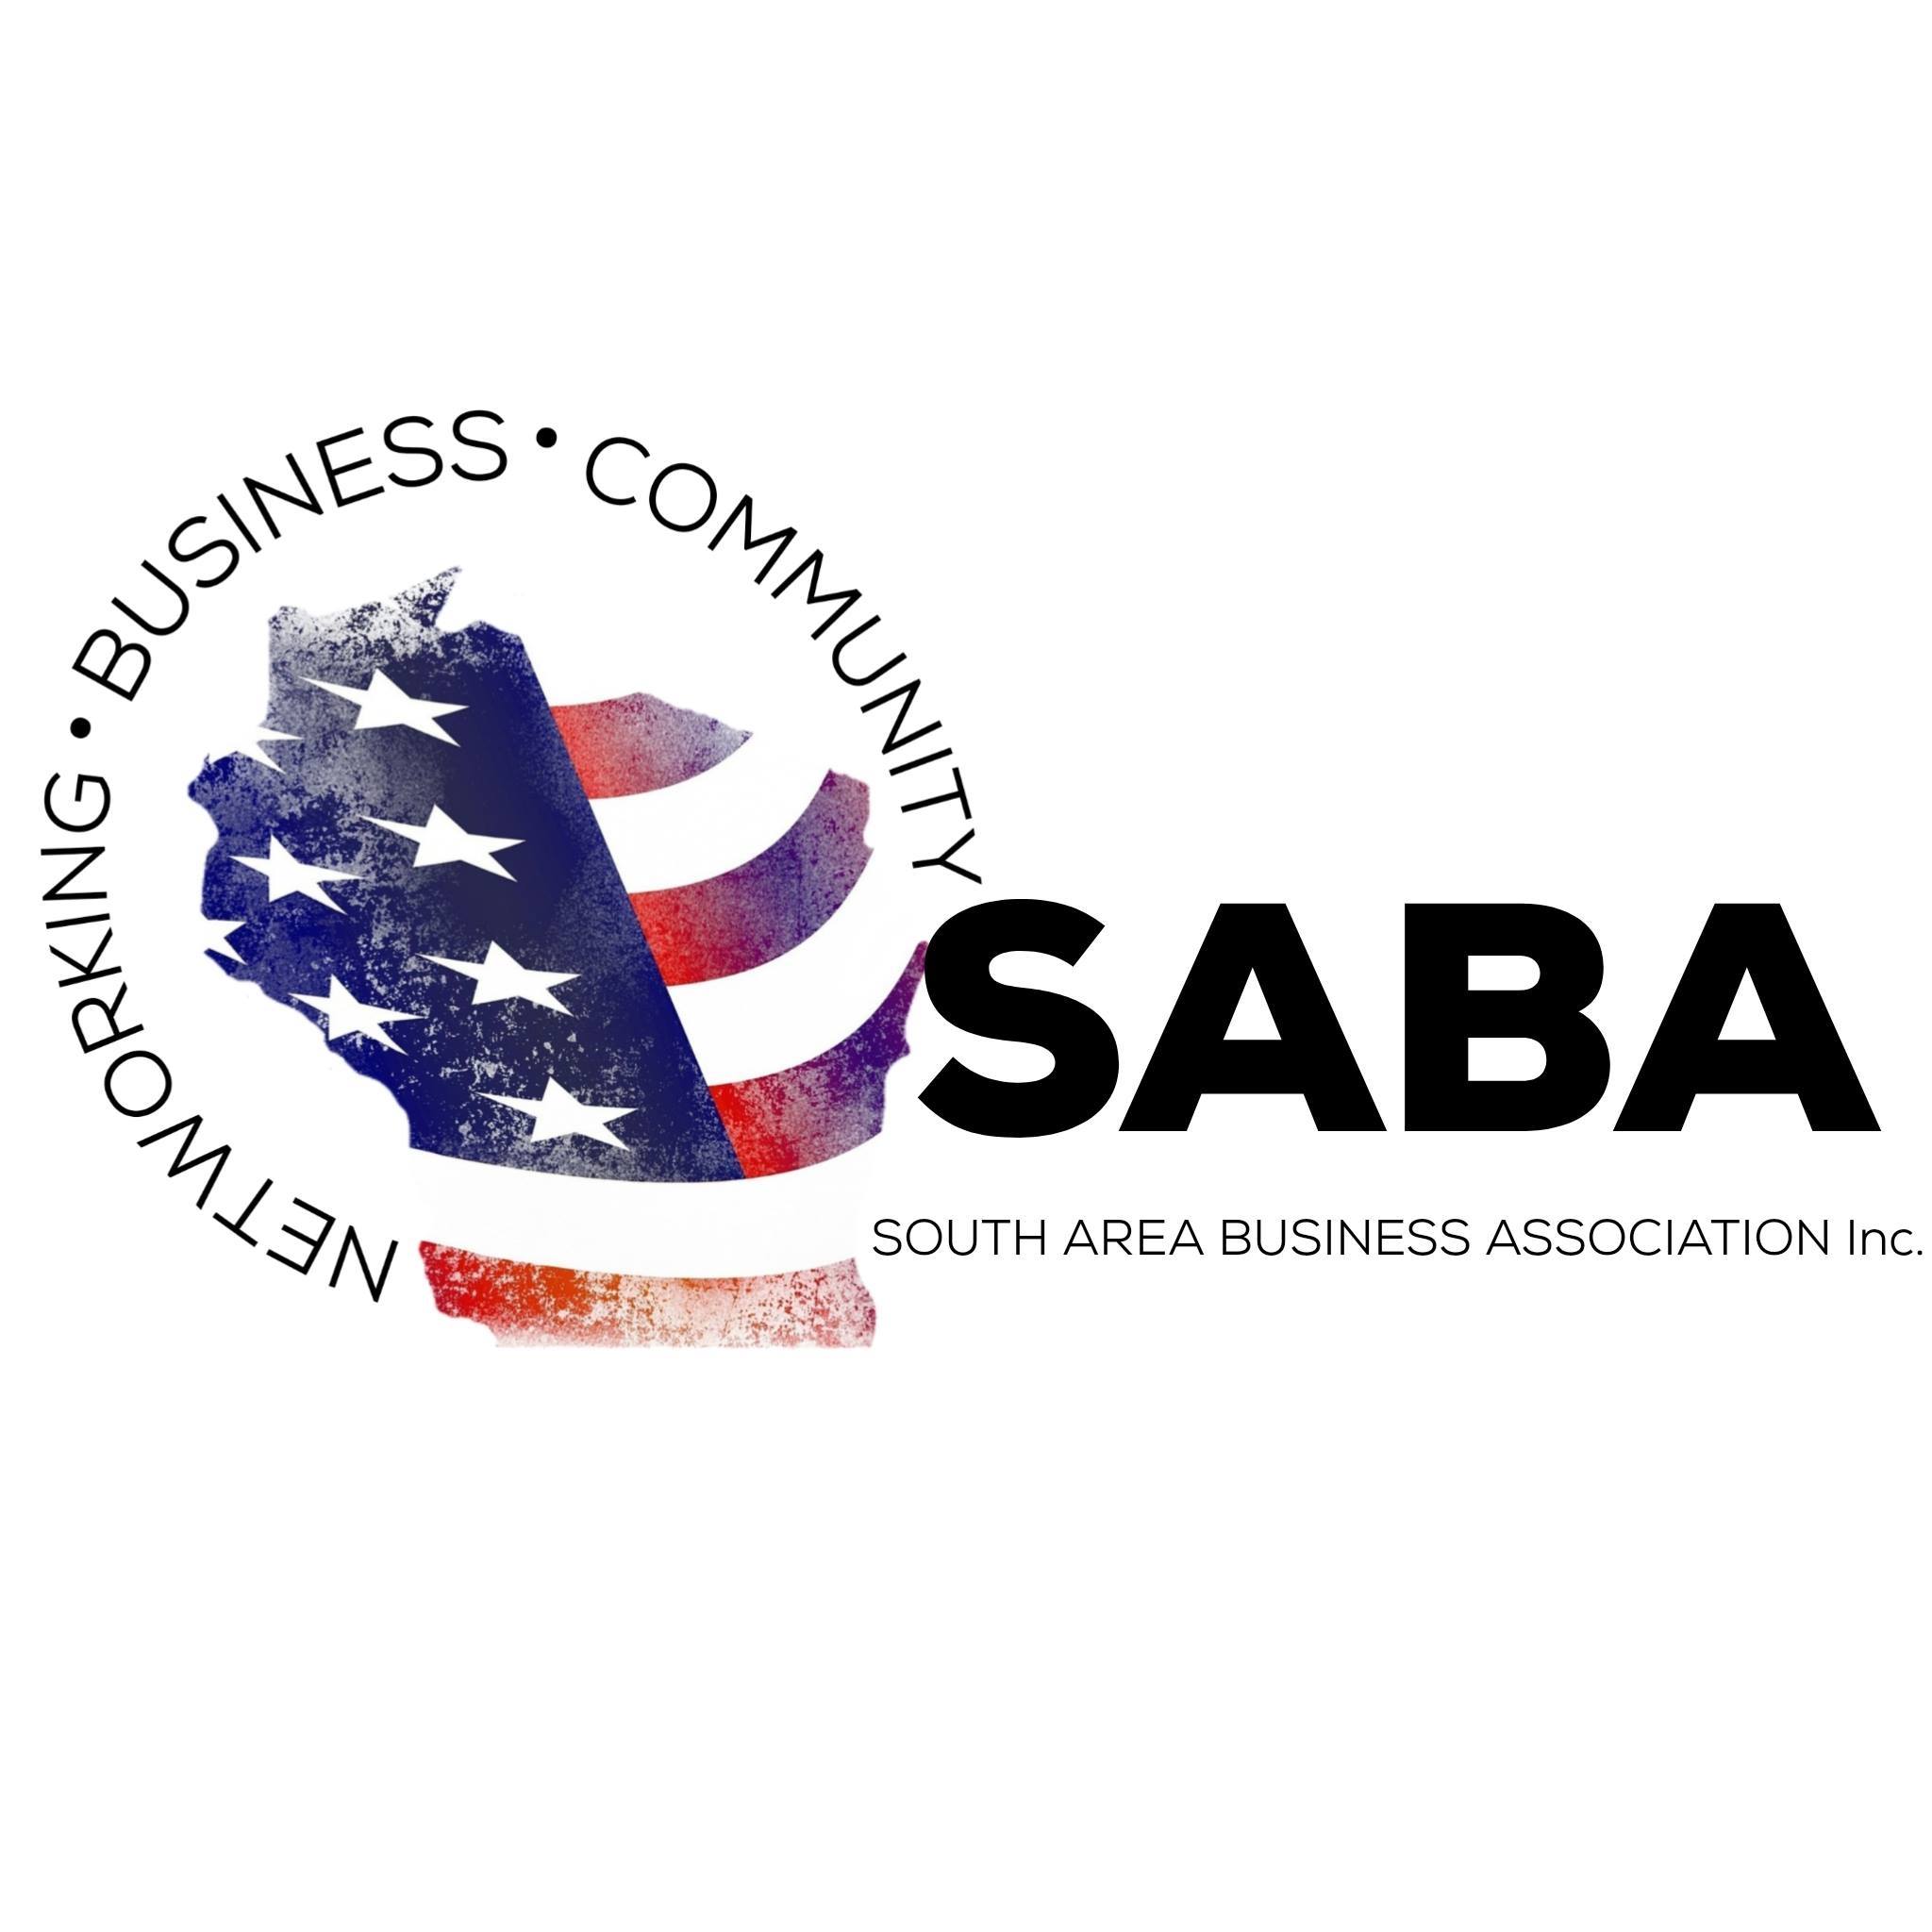 South Area Business Association